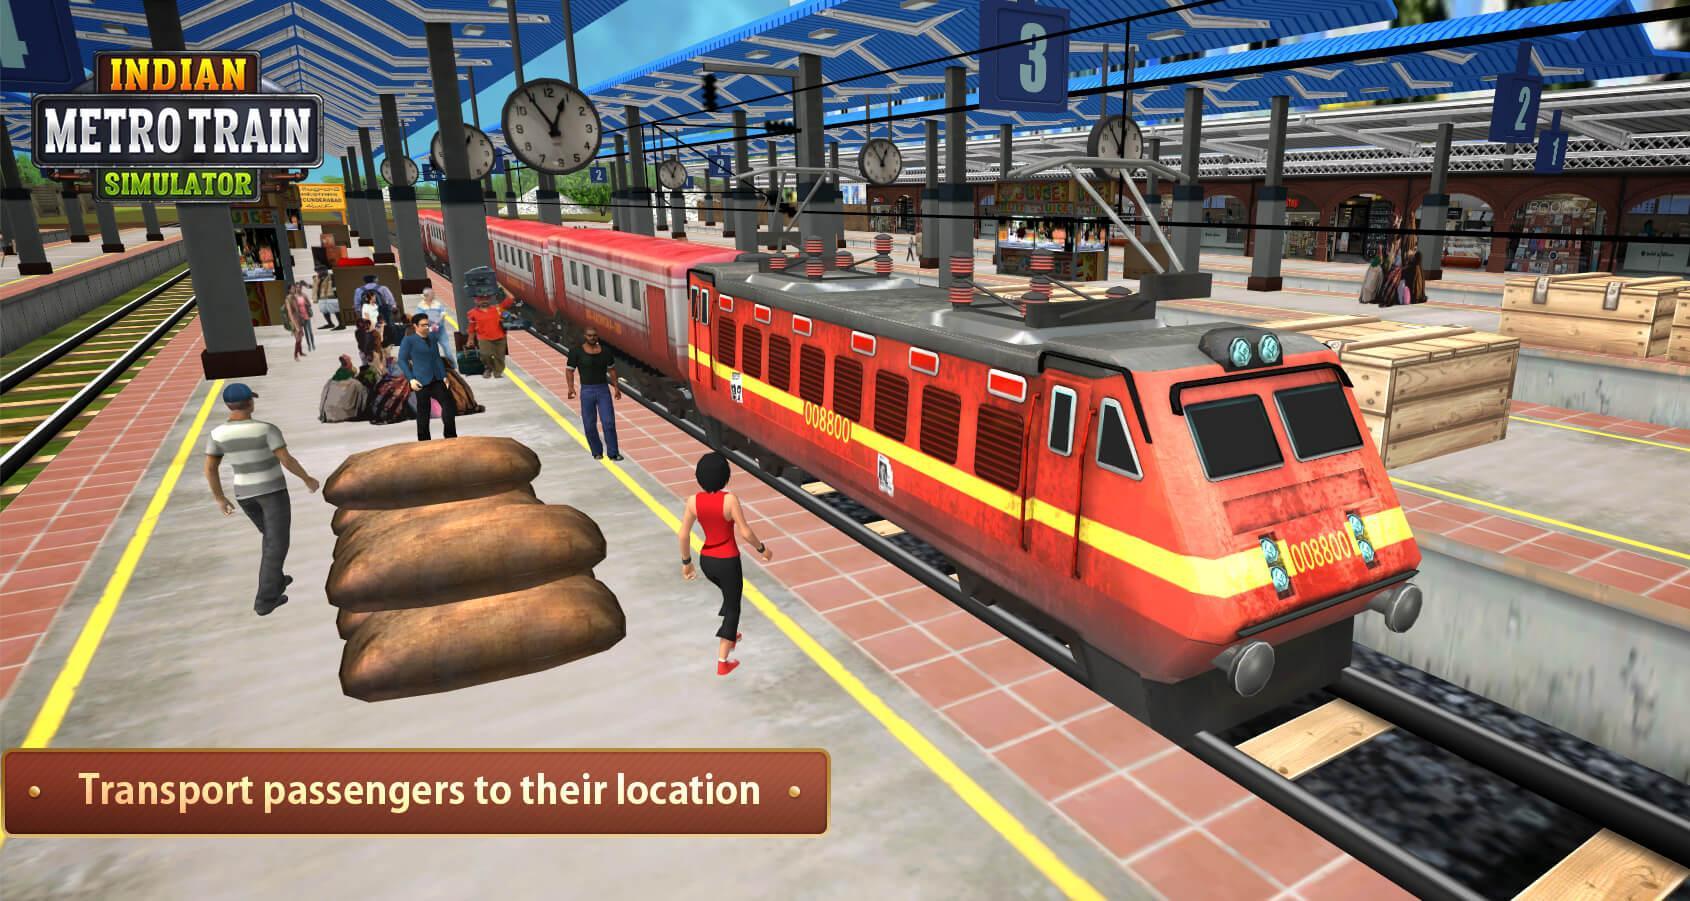 Screenshot 1 of Sim Kereta Api Metro India 2020 5.0